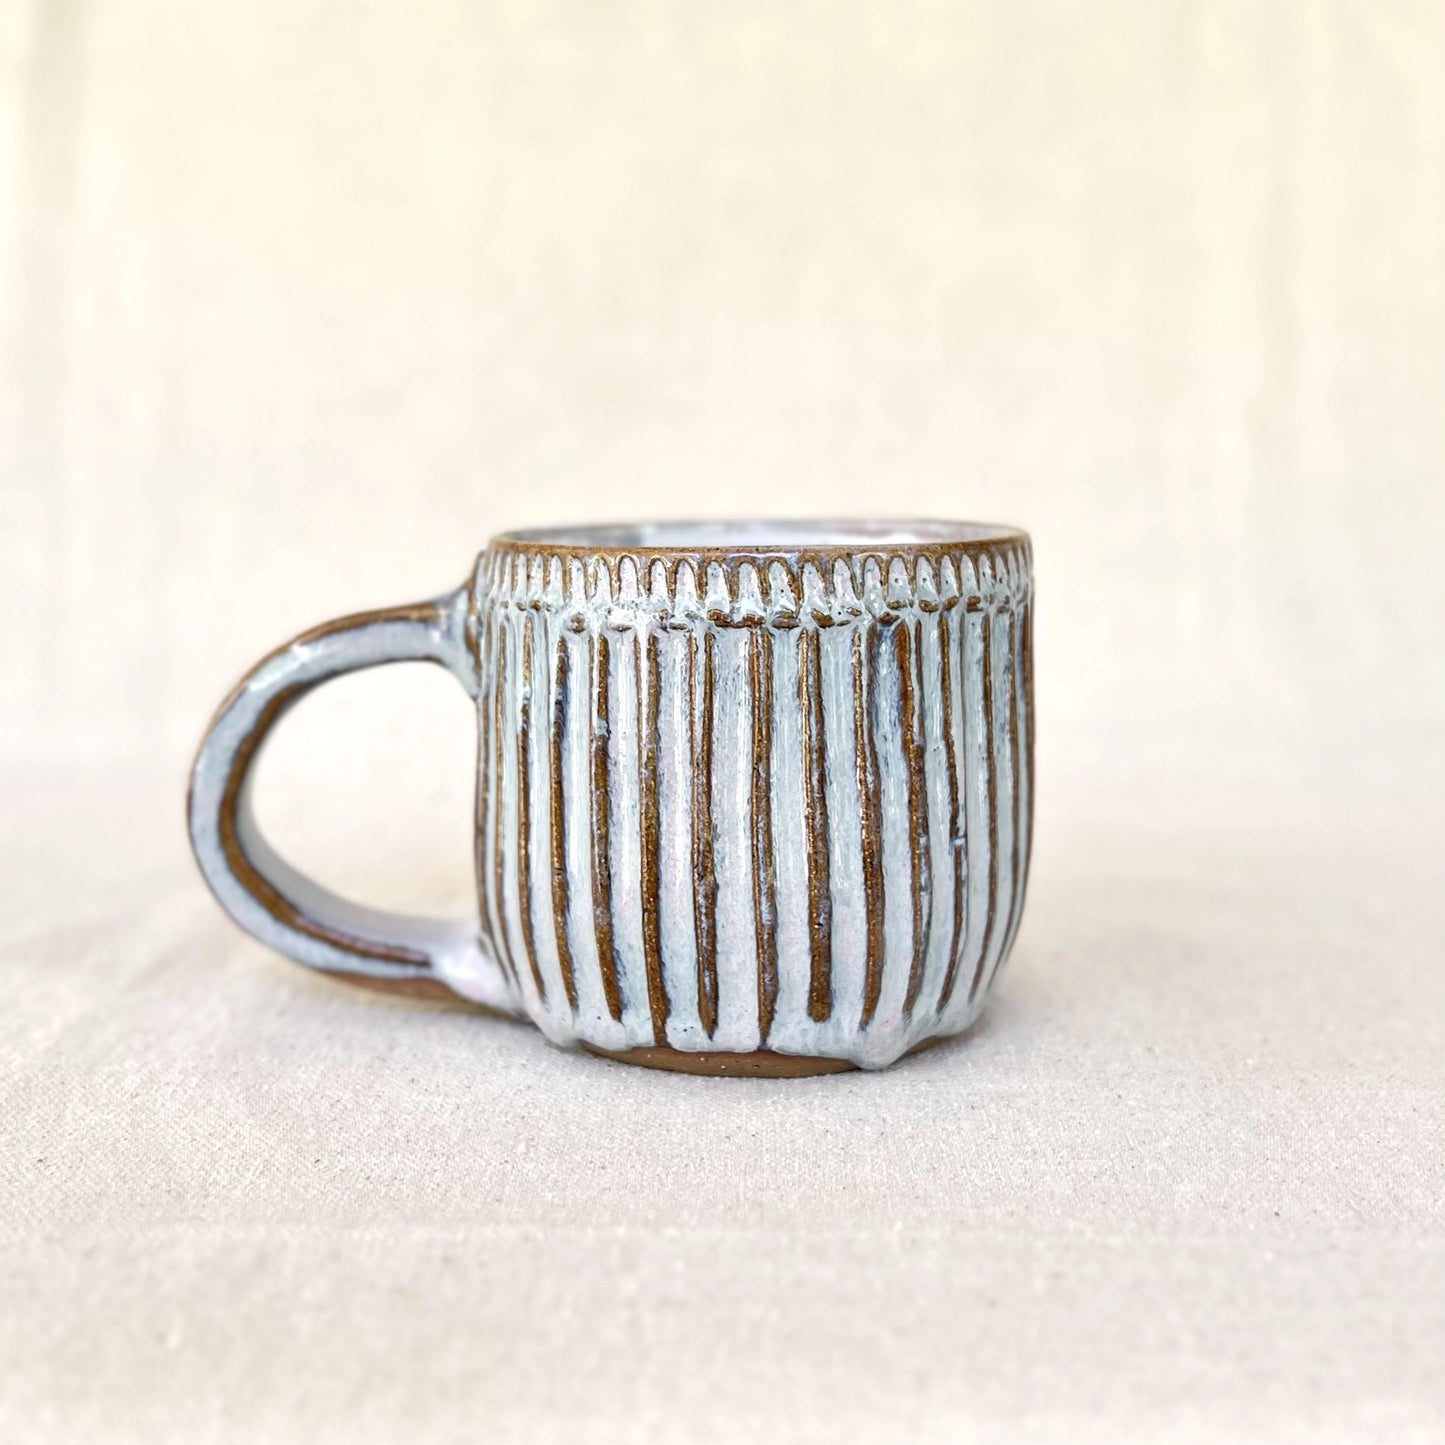 Large blue ceramic carved coffee mug with handle